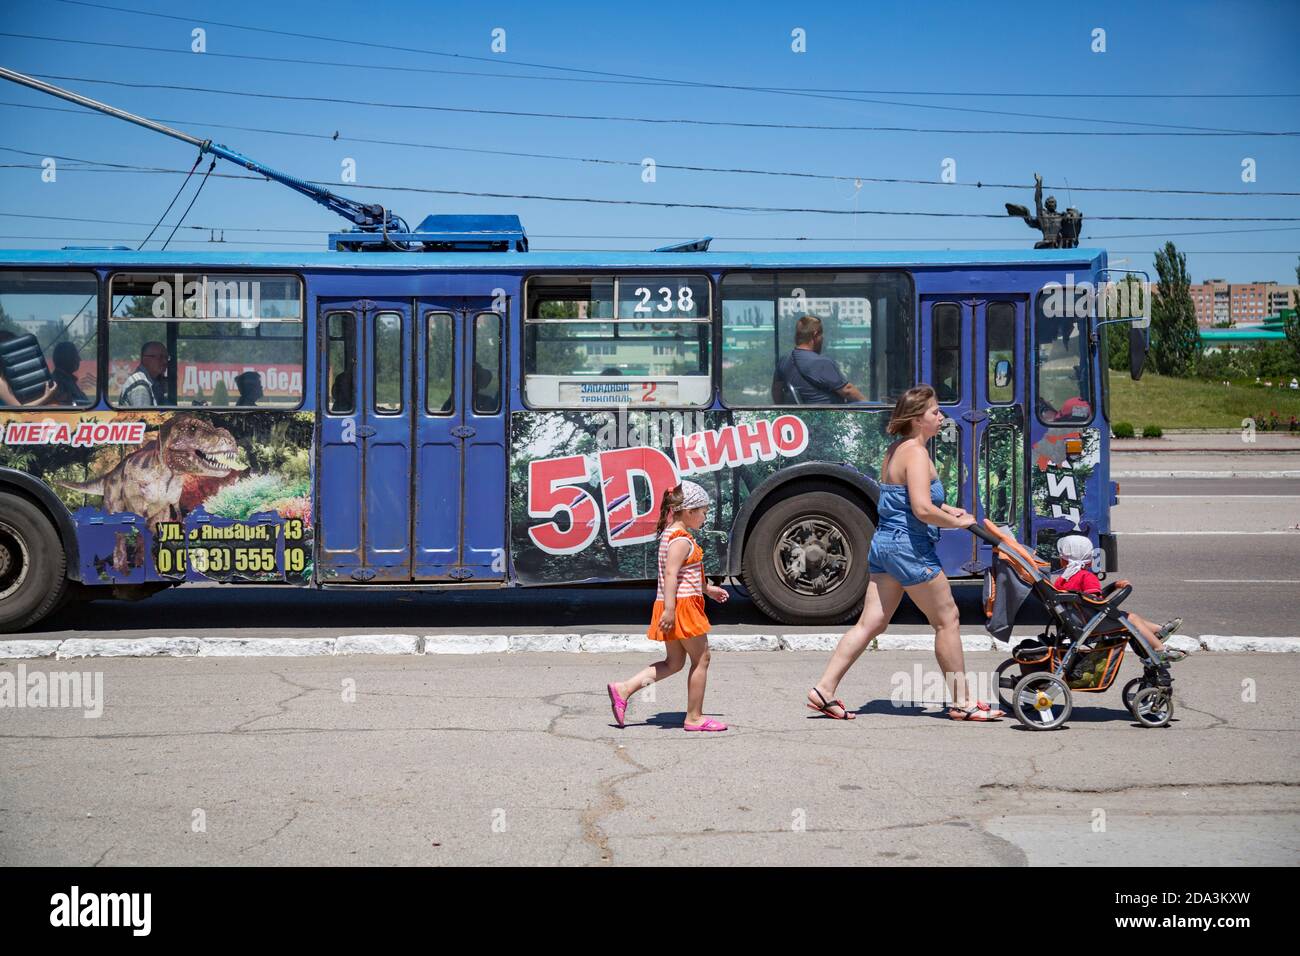 Street scene with pedestrians and public transport bus in Tiraspol, Pridnestrovian Moldavian Republic (Transnistria). Stock Photo